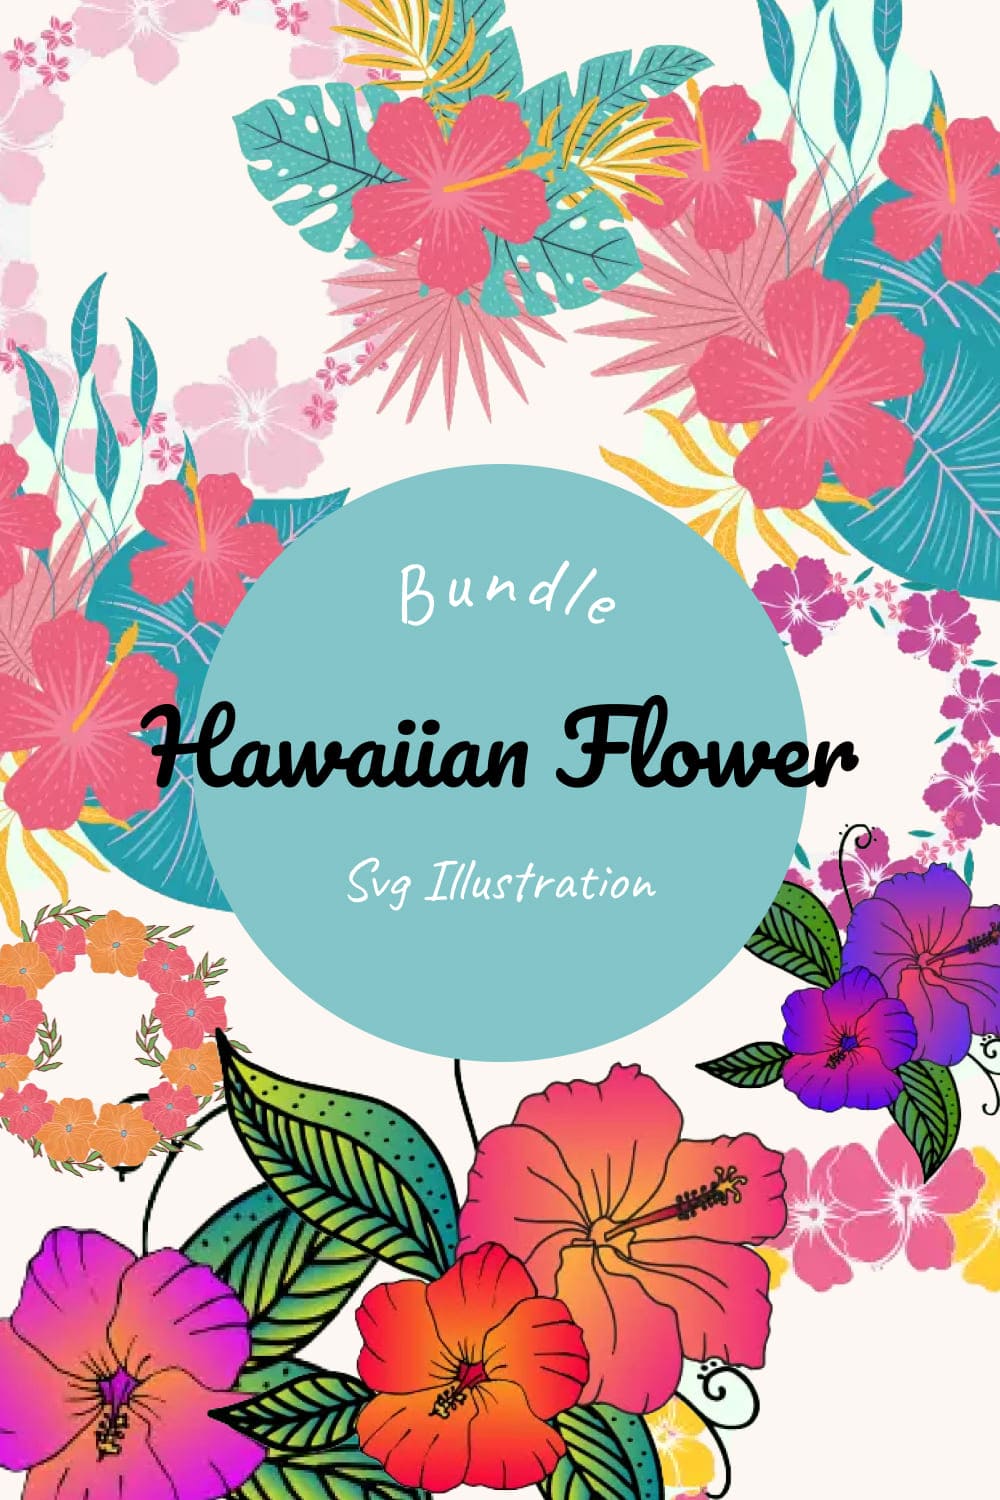 Hawaiian flower svg bundle, picture for Pinterest.